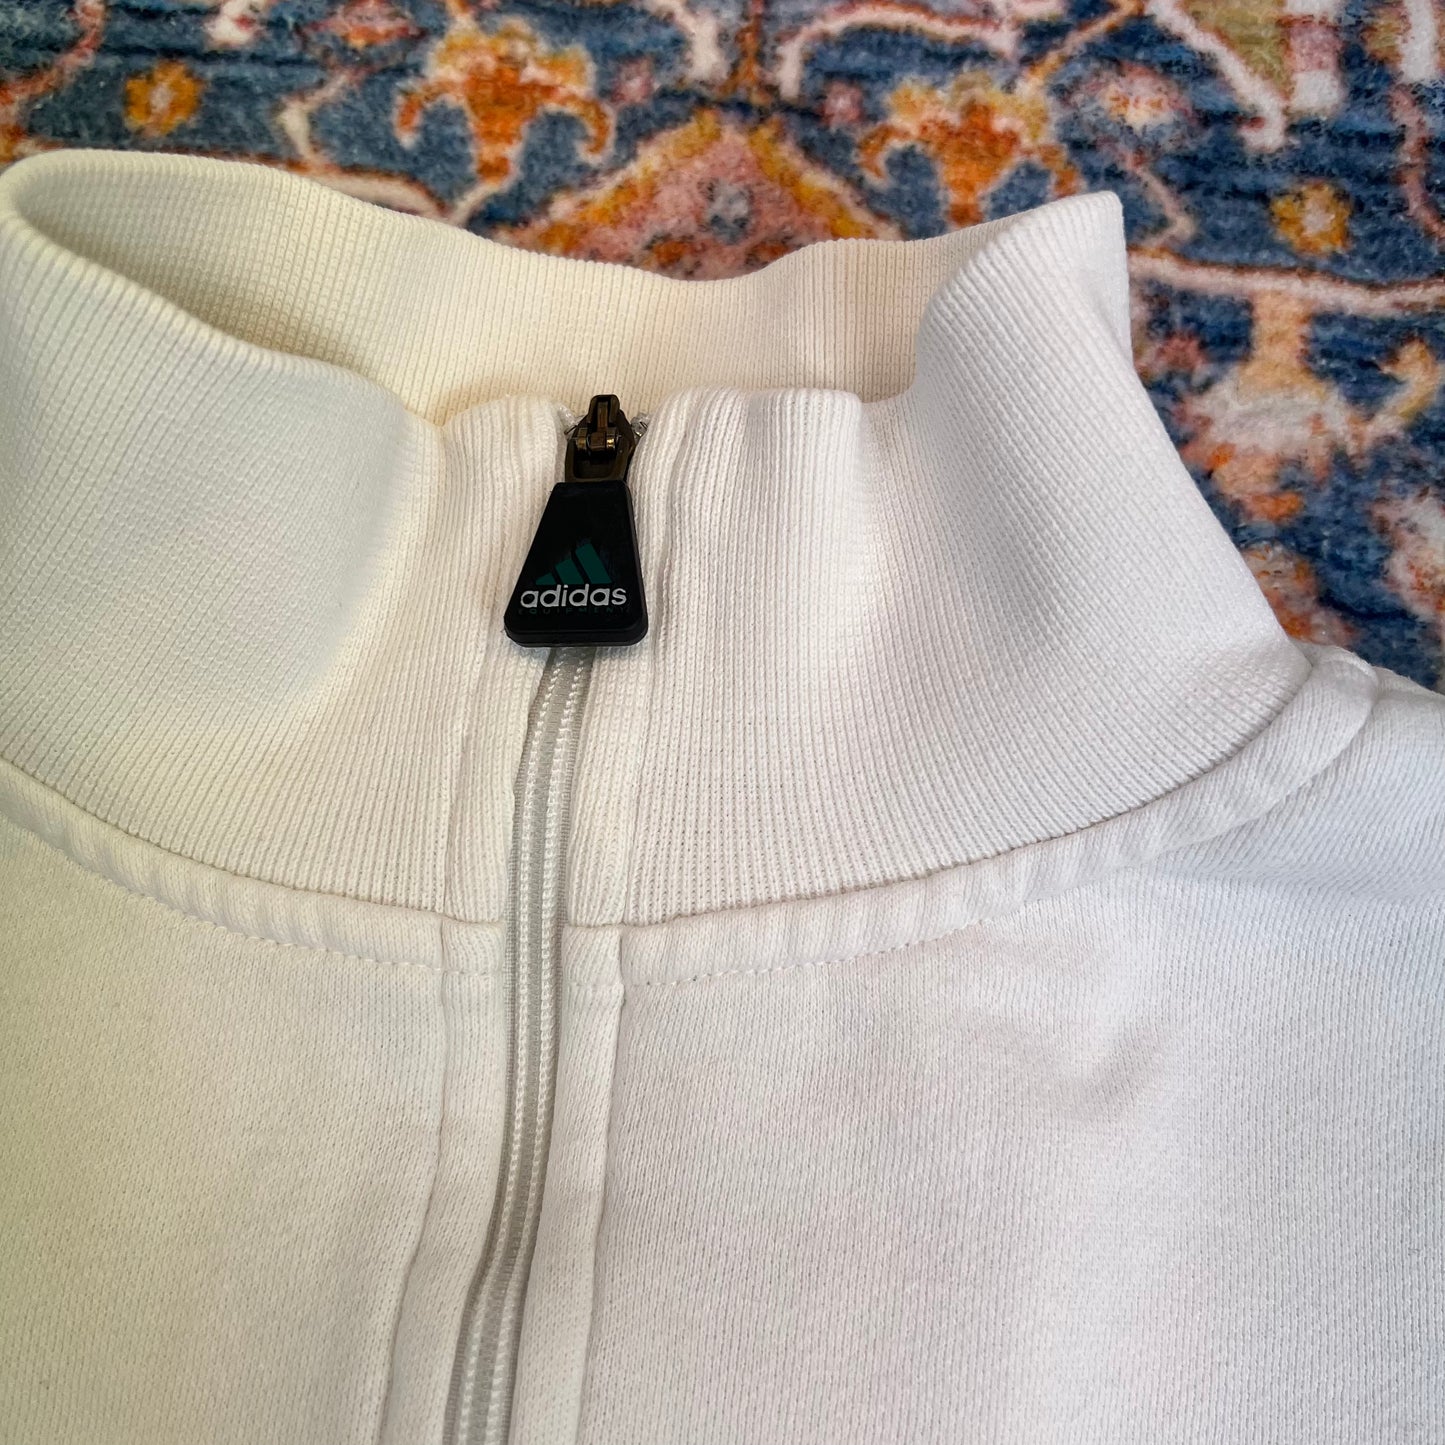 Vintage Adidas Equipment 1/4 Zip Sweatshirt (XL)